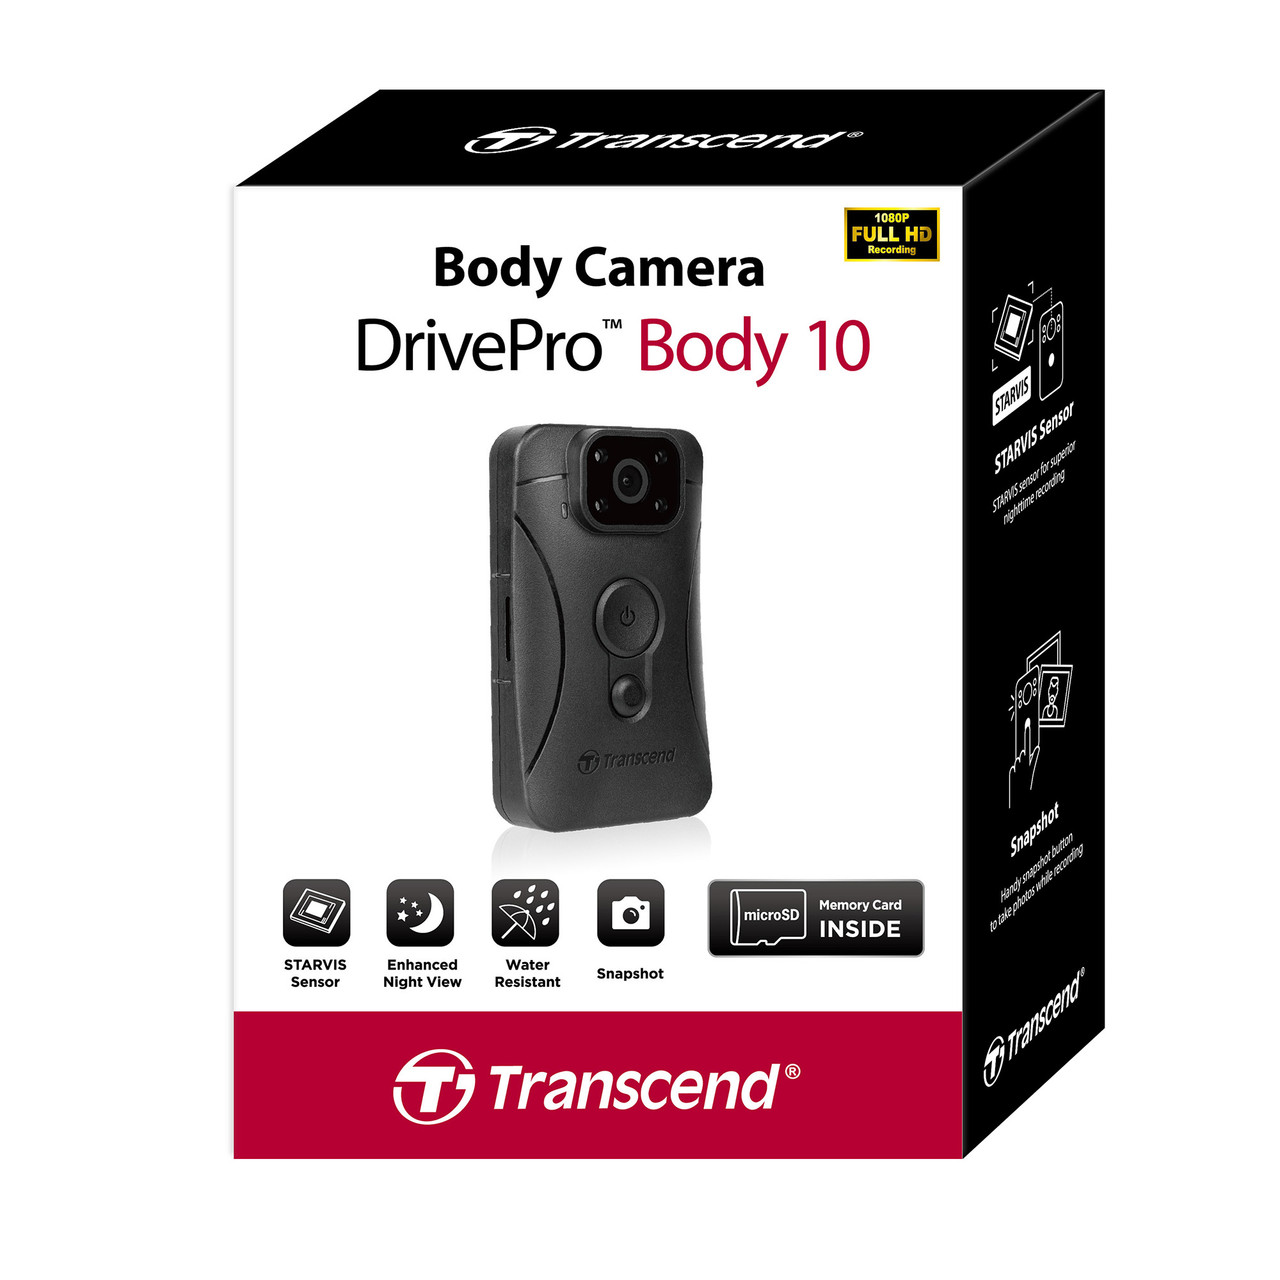 DrivePro Body 10 body camera box